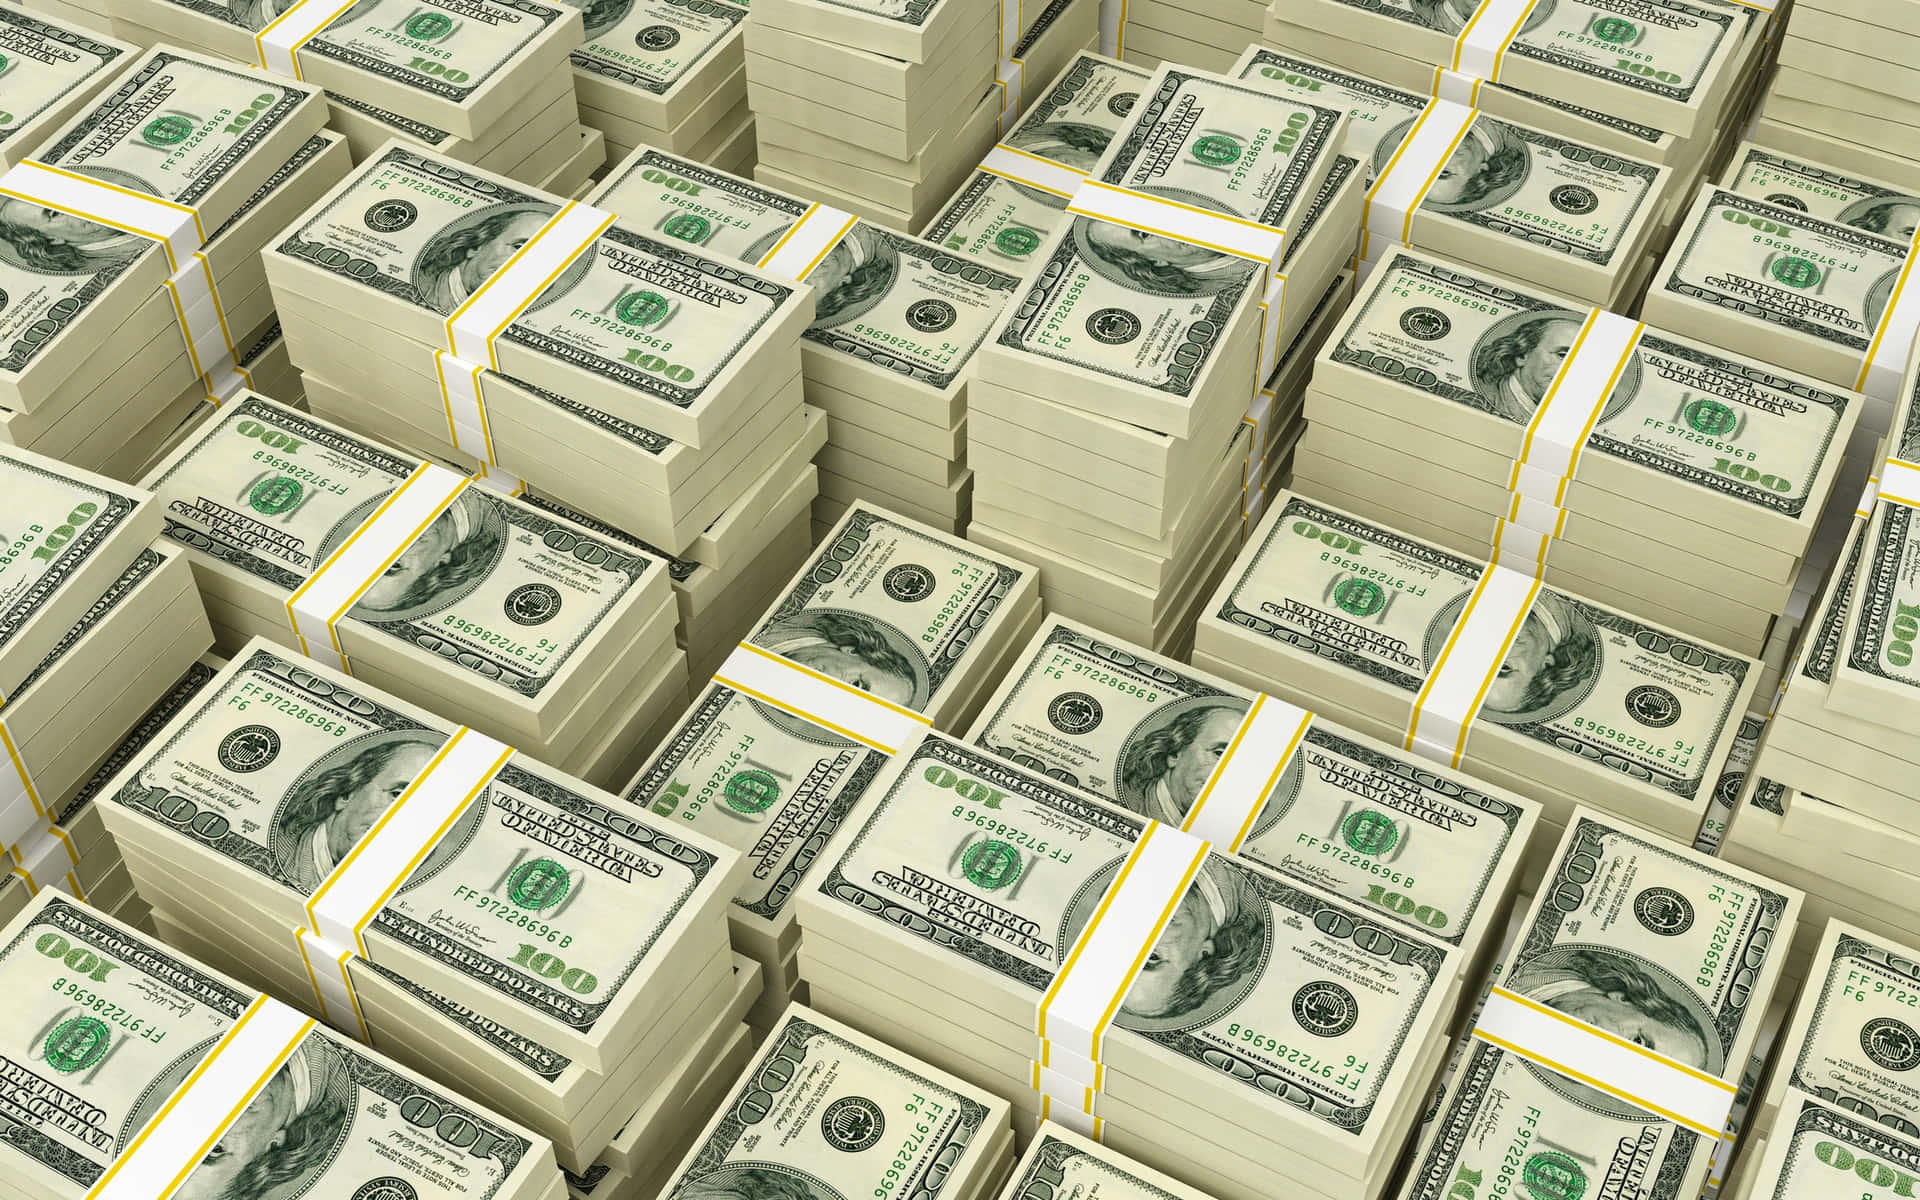 An impressive close-up shot of the US dollar bills